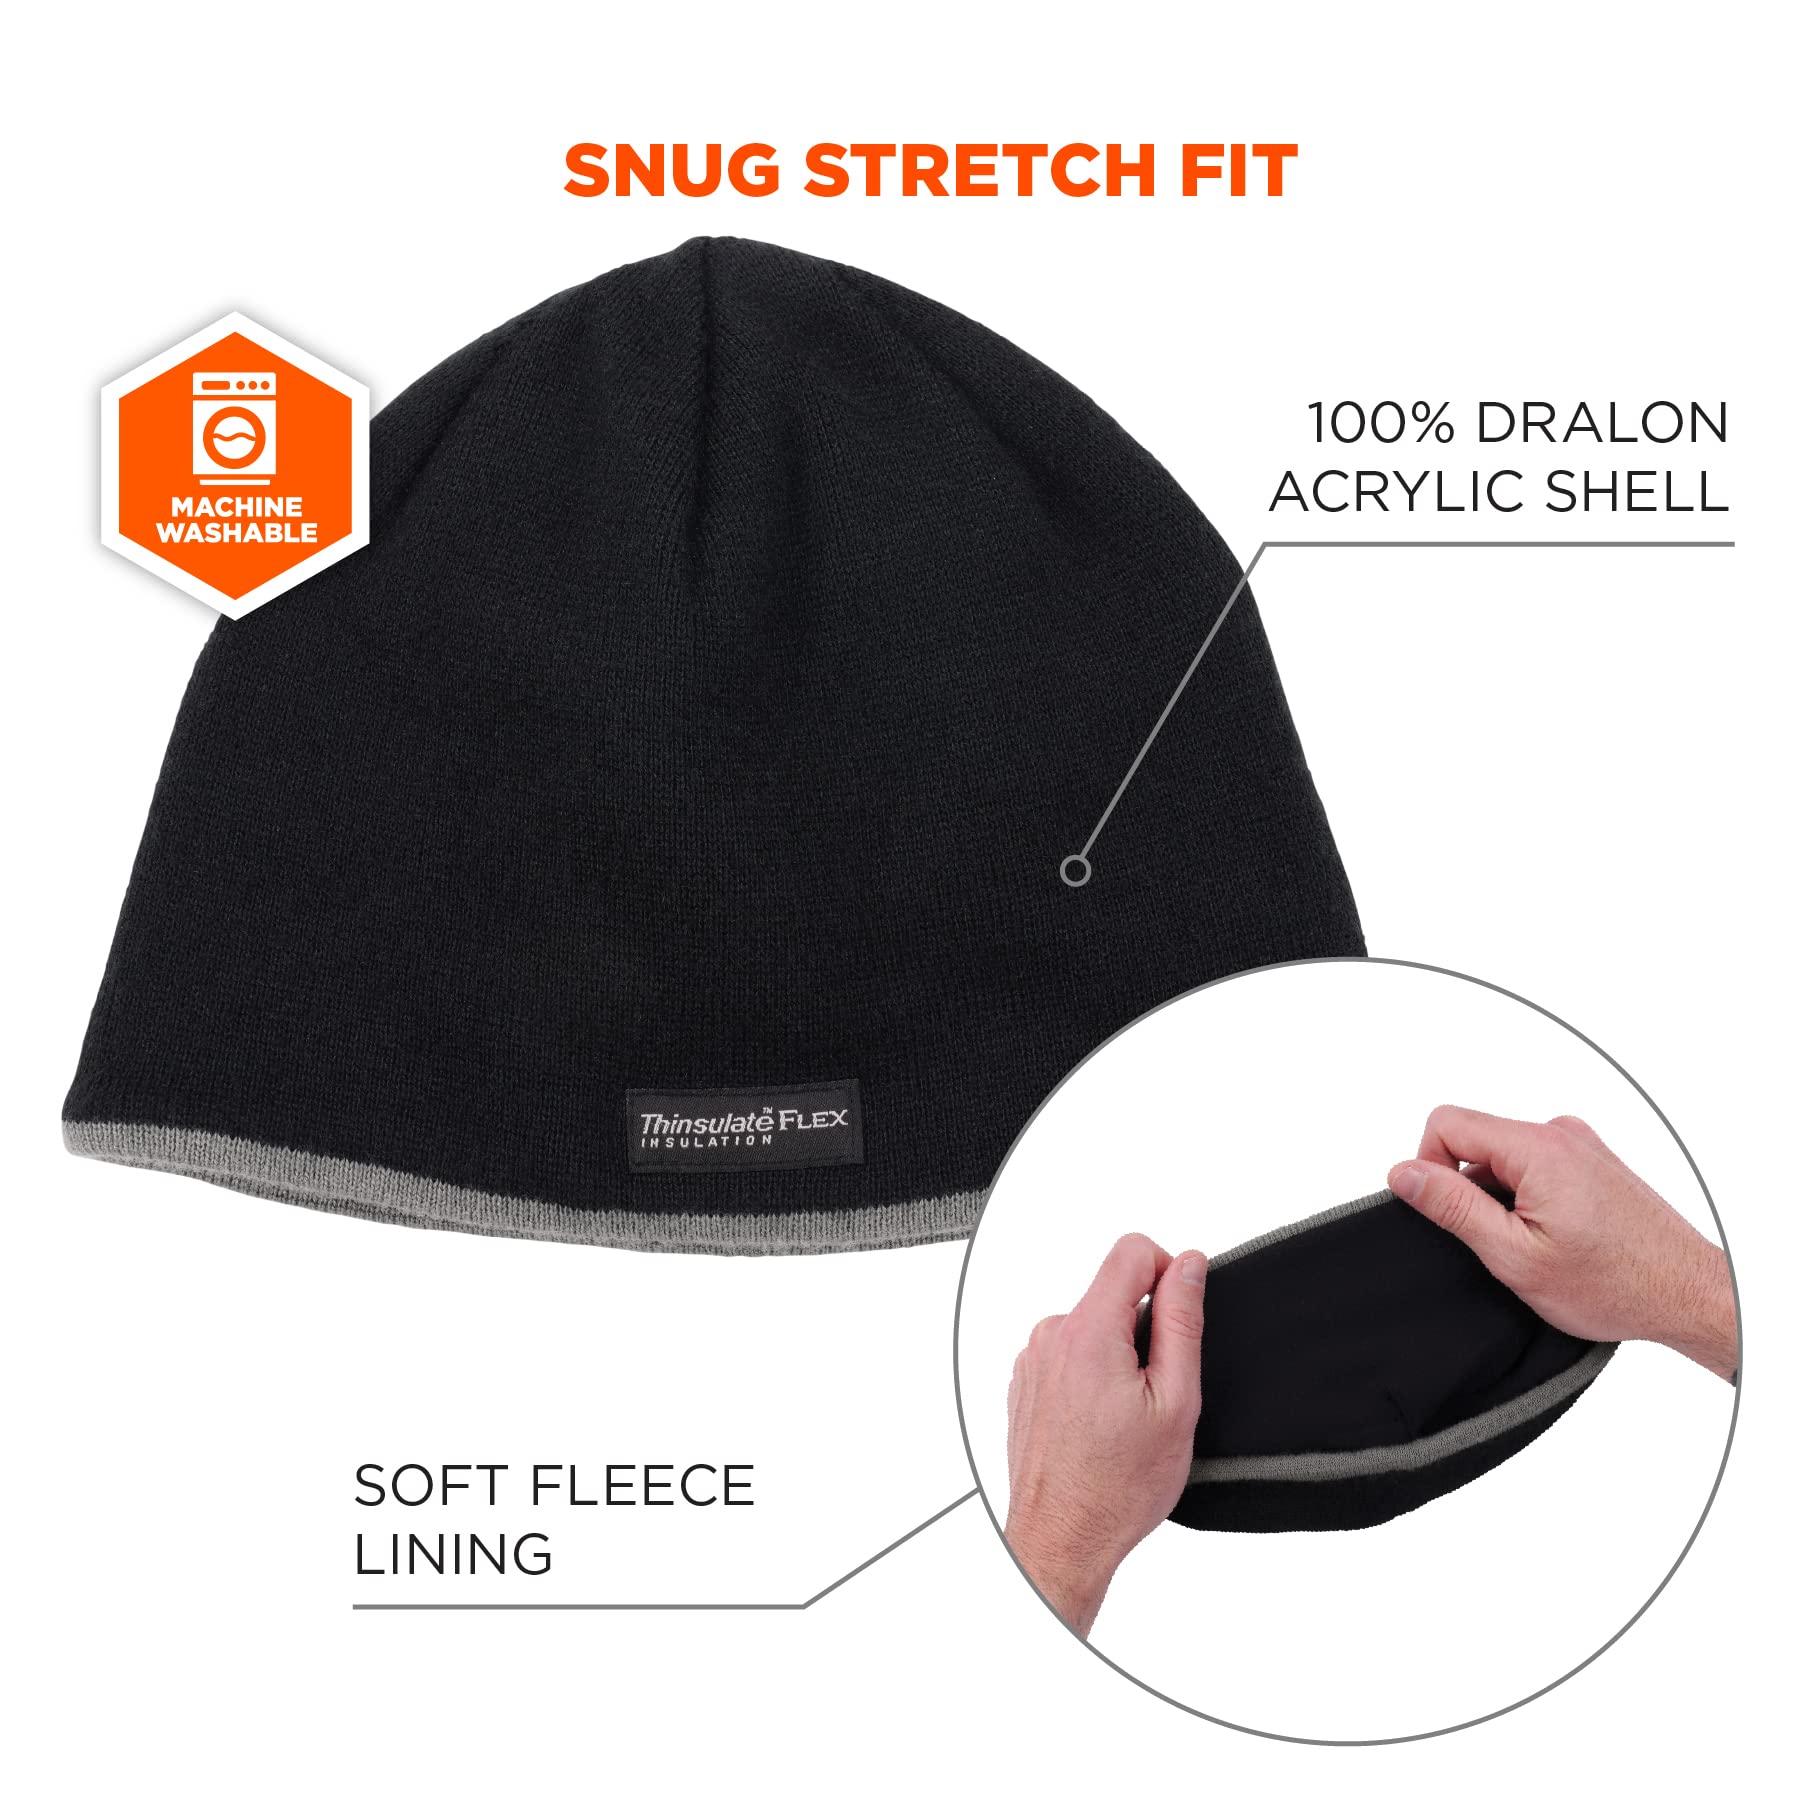 Ergodyne - 16818 N-Ferno 6818 Insulated Thermal Knit Beanie Hat,Black